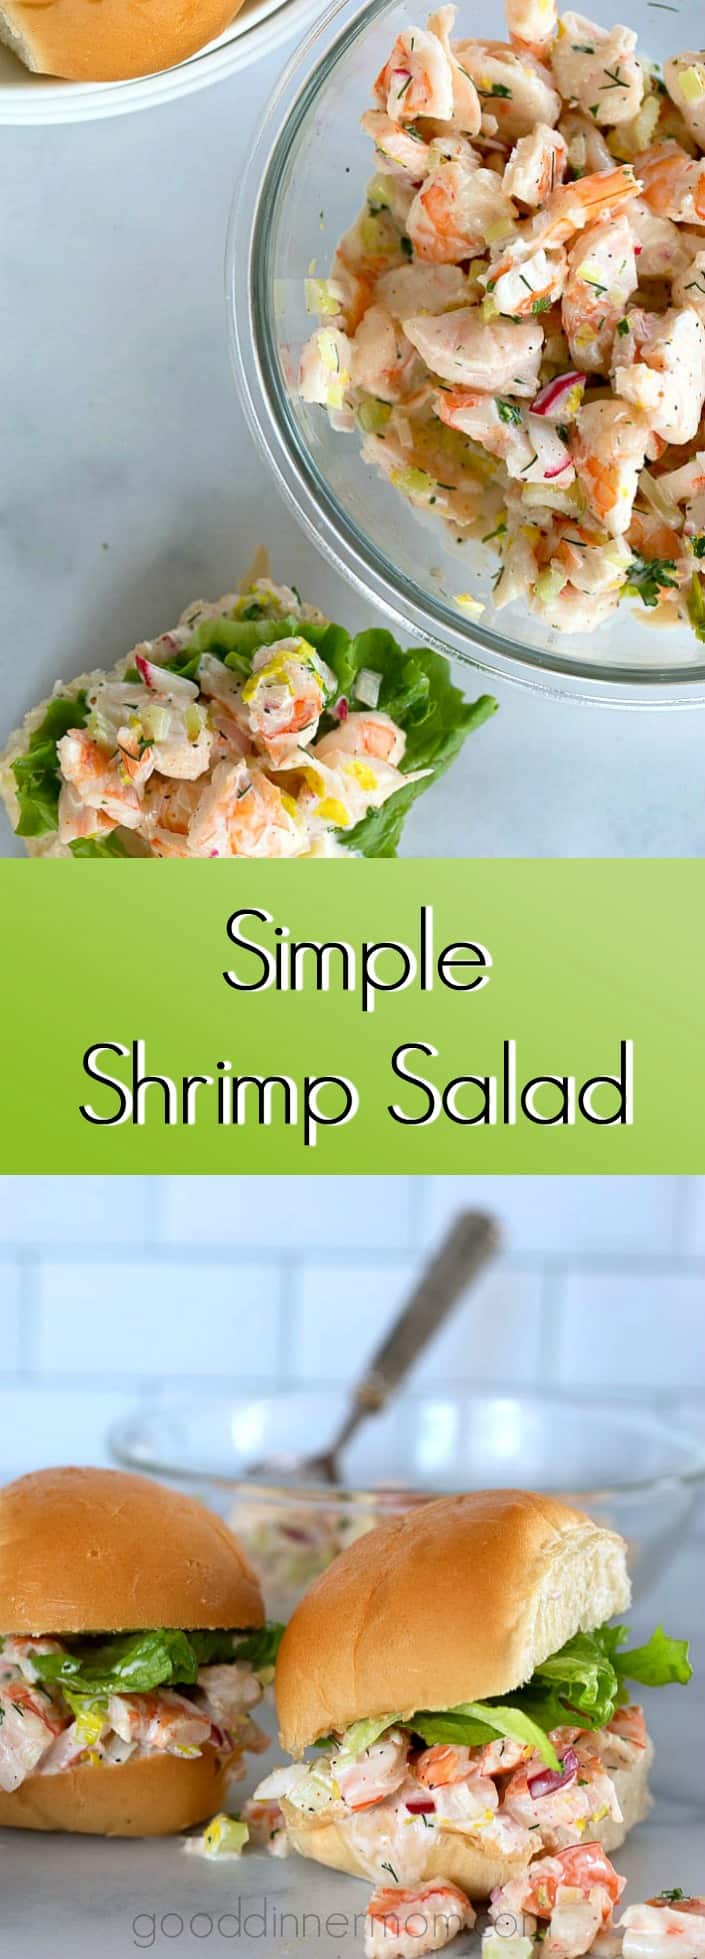 Simple Shrimp Salad Pinterest Pin